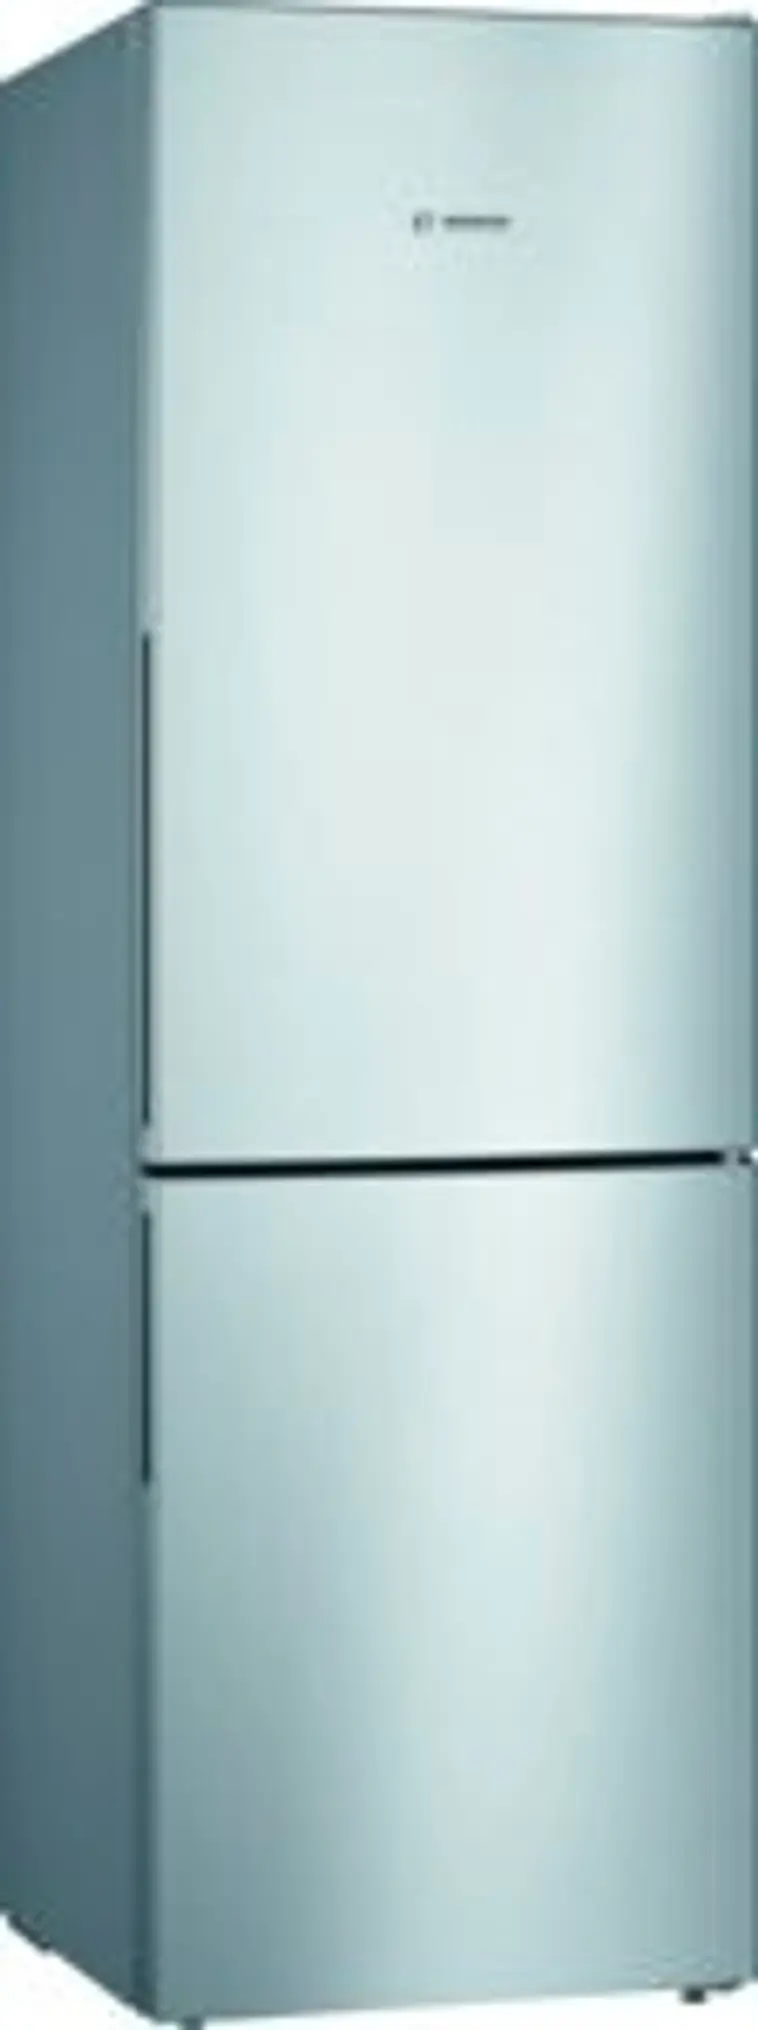 Jääkaapit ja pakastimet | Prisma verkkokauppa